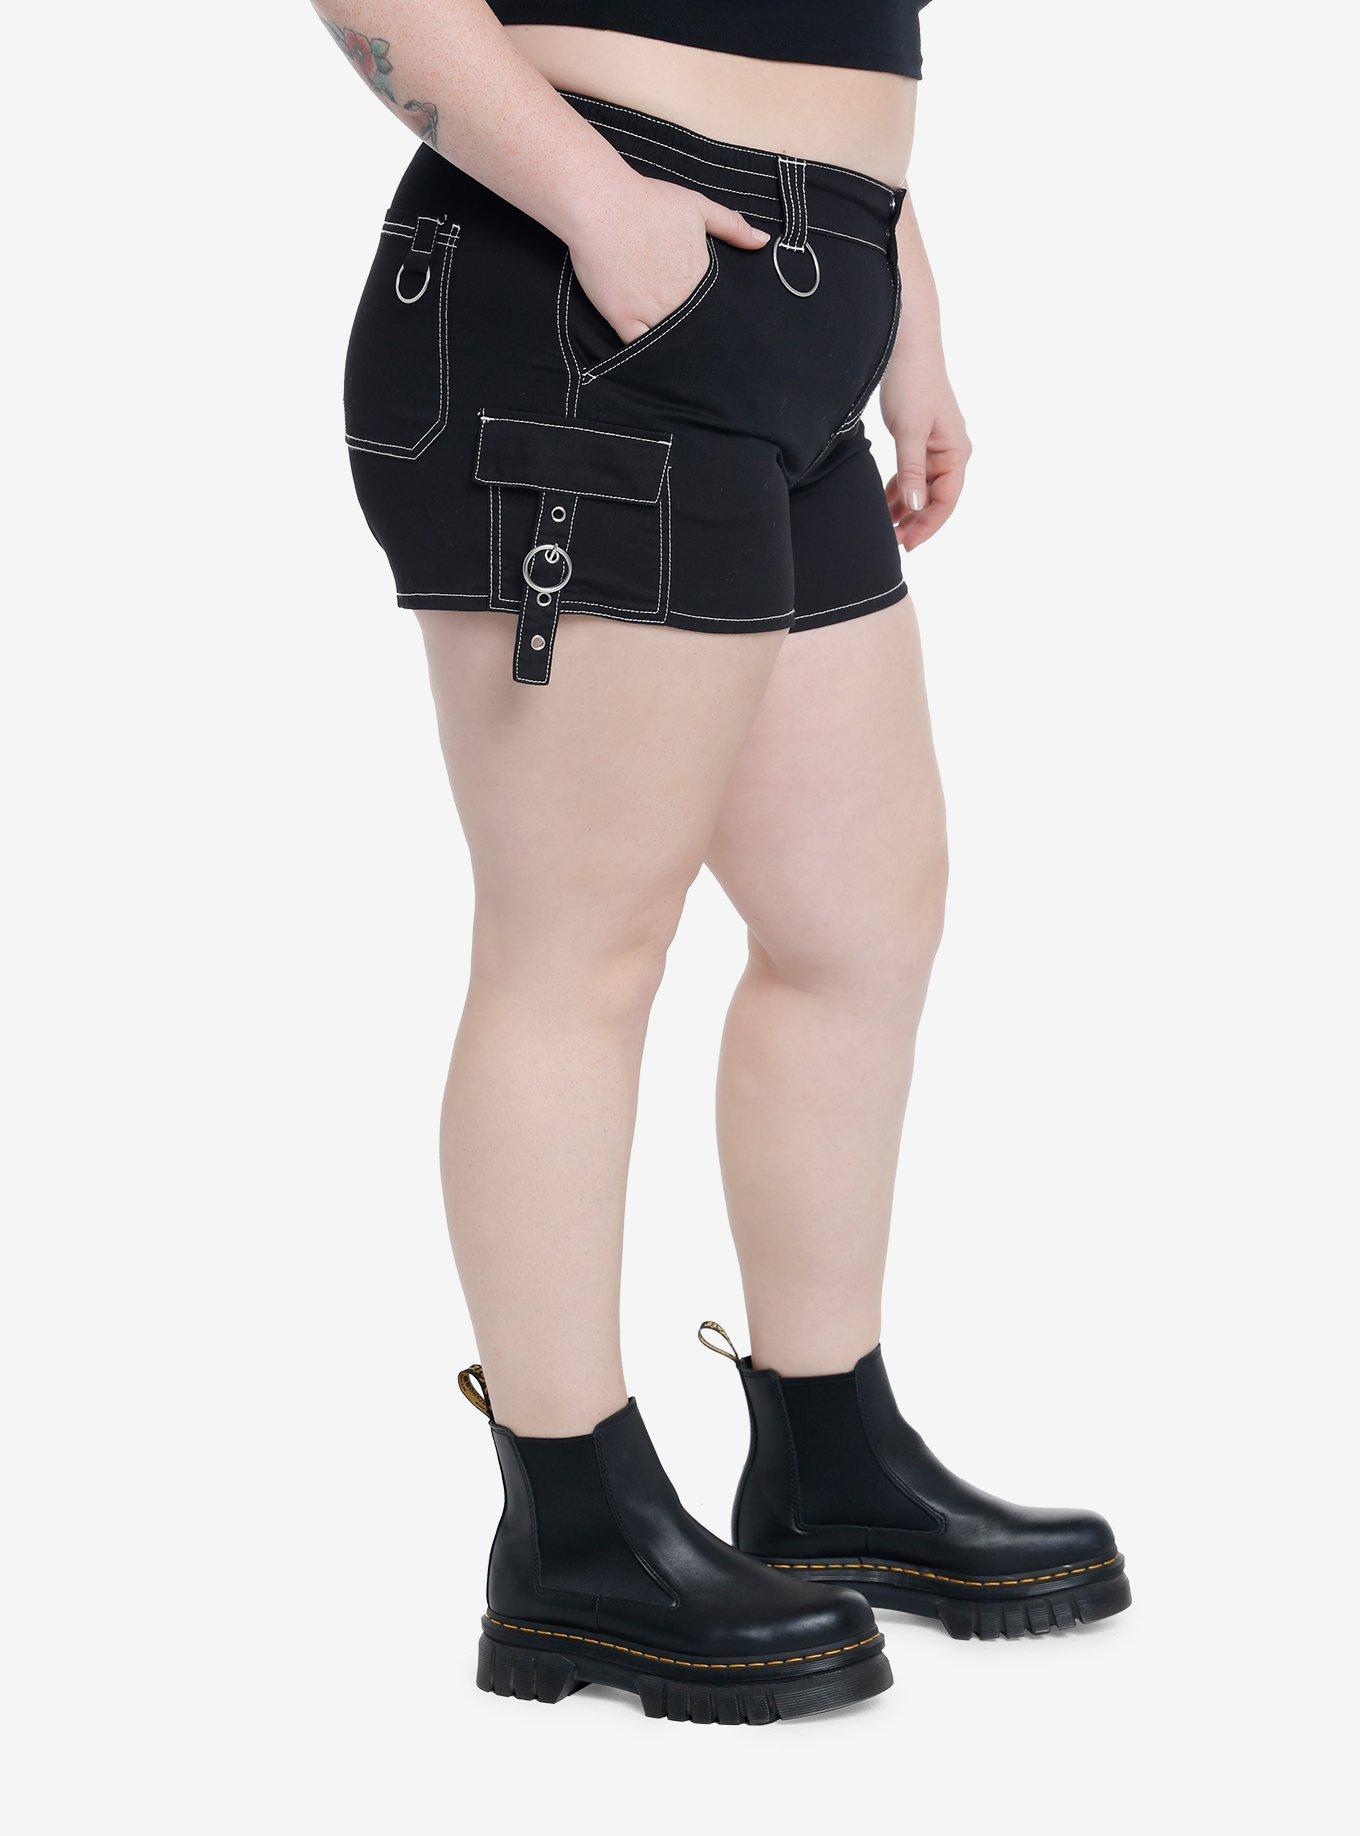 Hardware Grommet Black Cargo Shorts Plus Size, BLACK, alternate